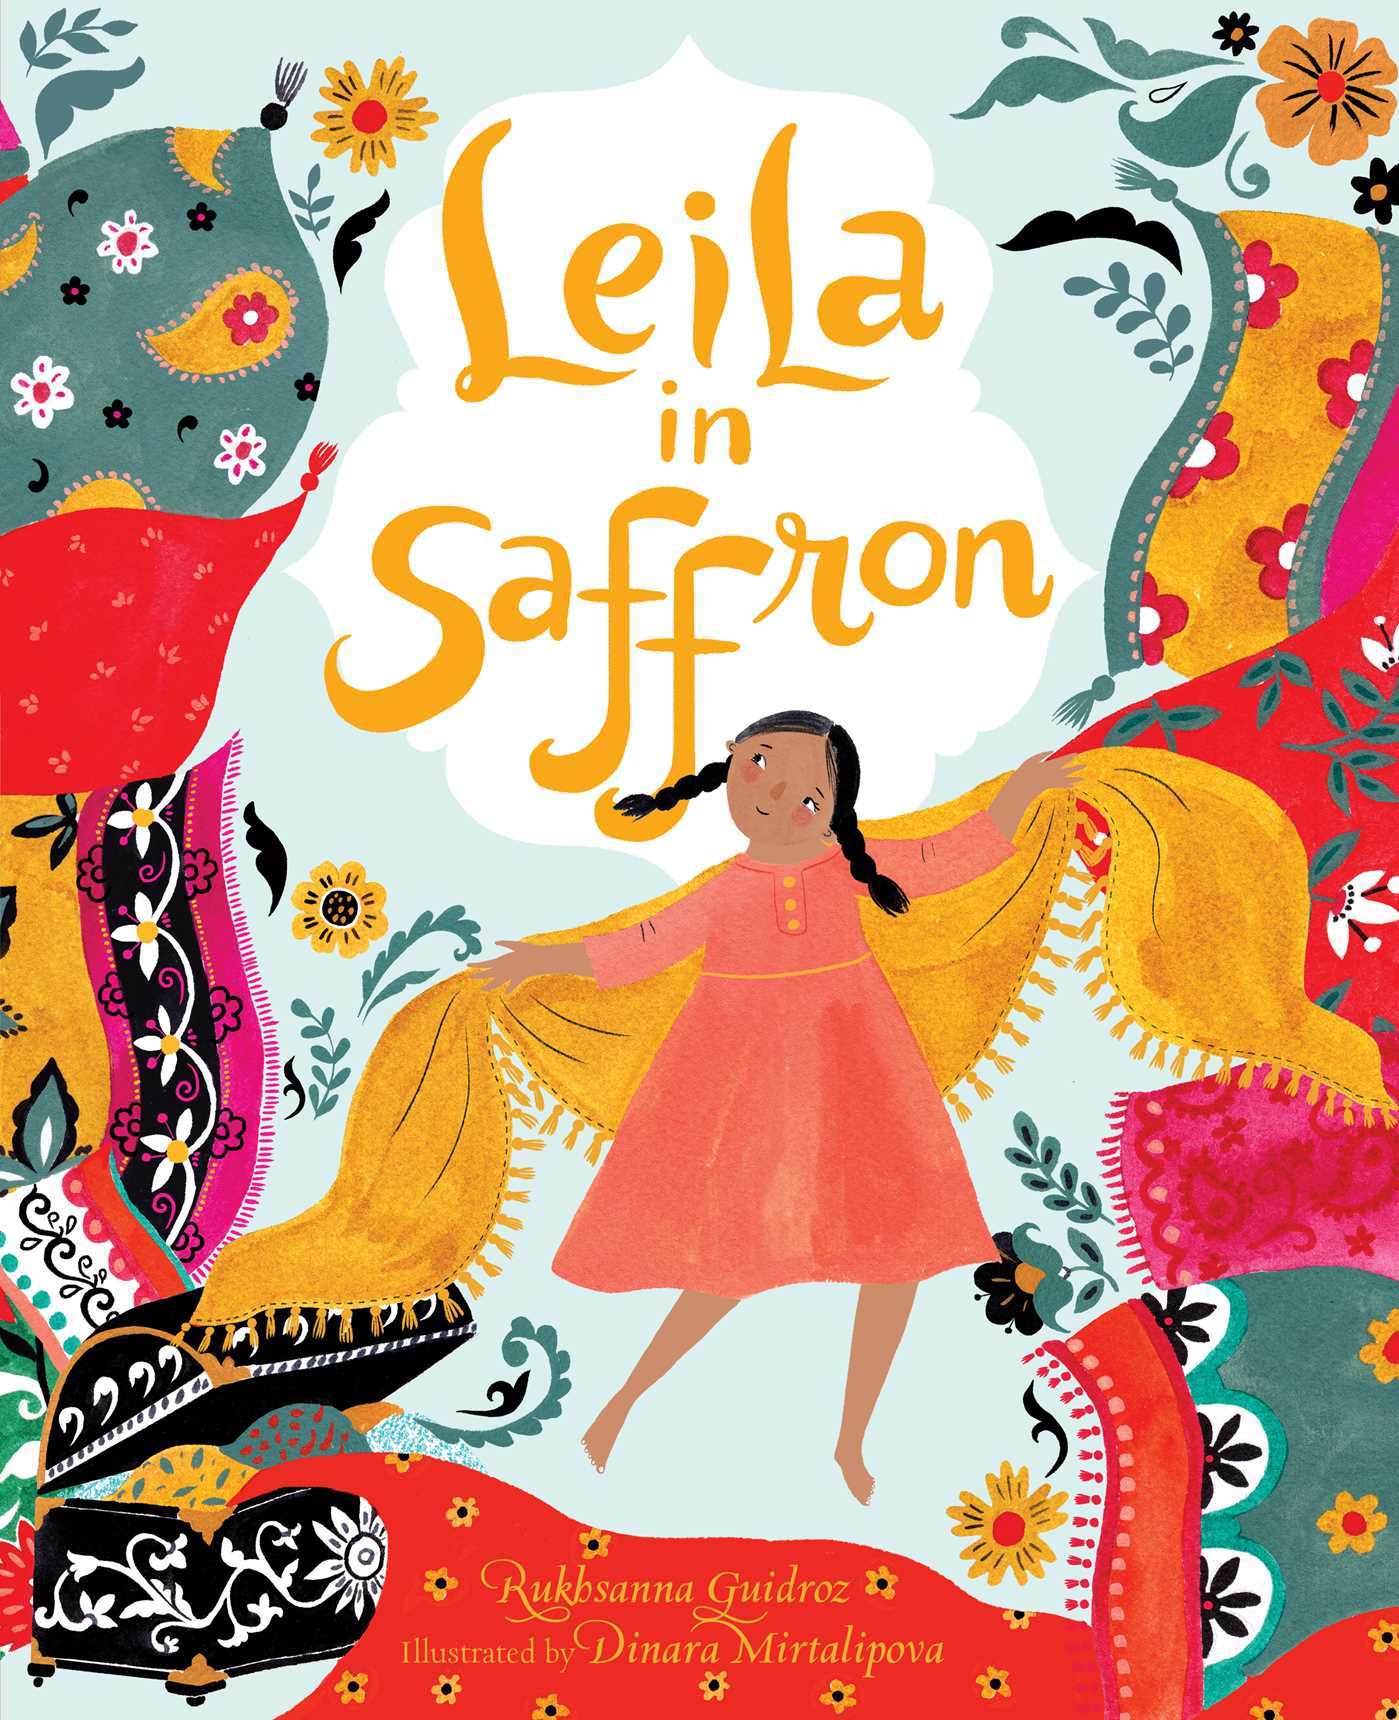 Image for "Leila in Saffron"